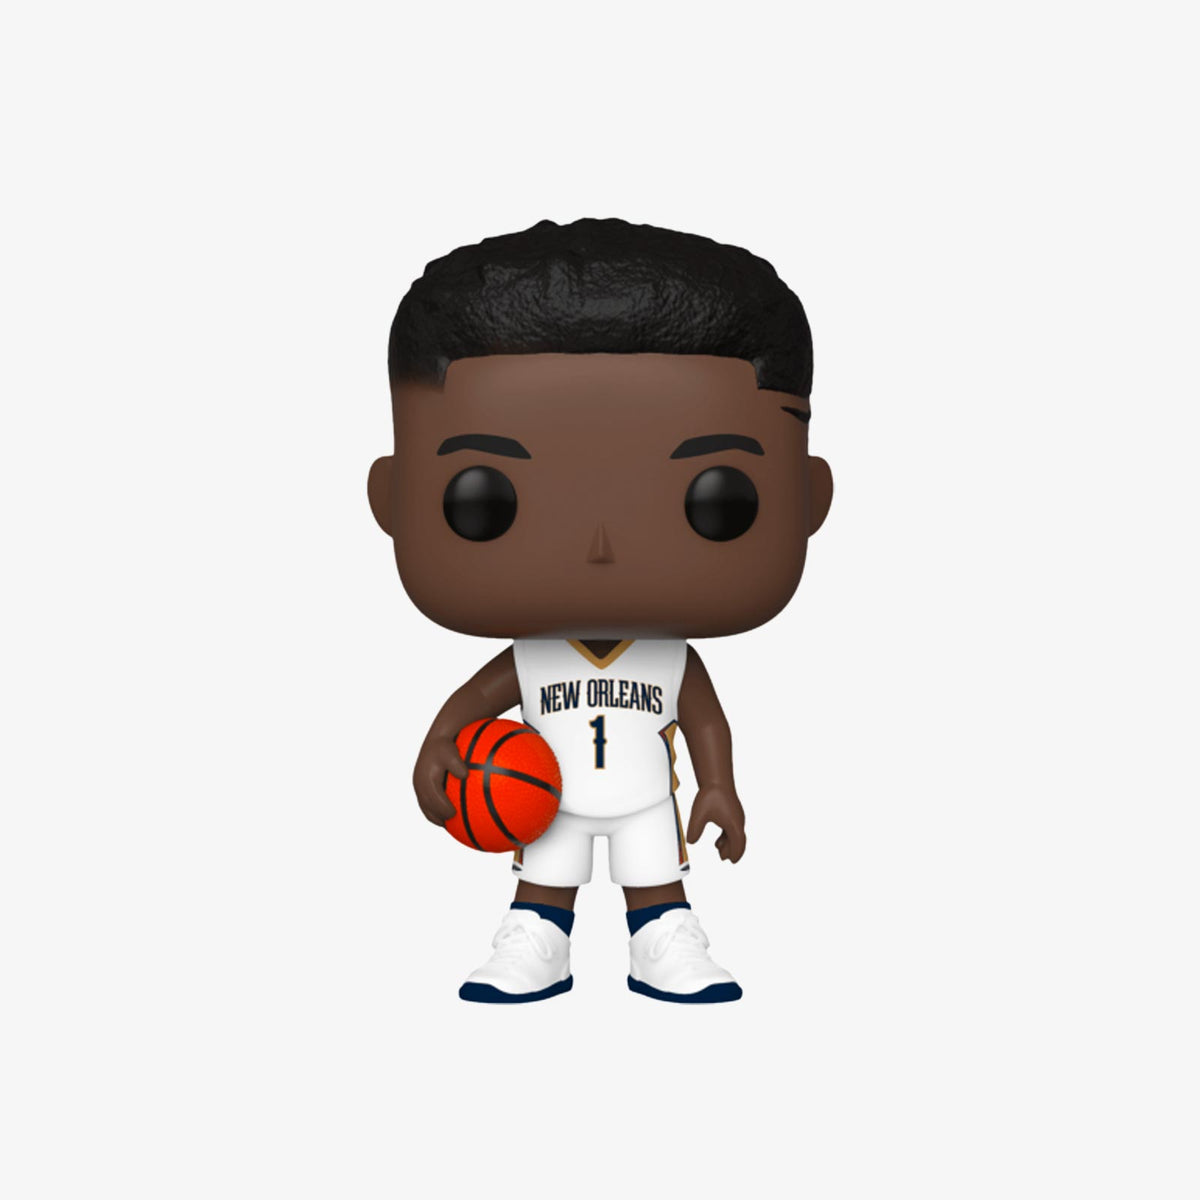 Zion Williamson New Orleans Pelicans NBA Pop Figure - White